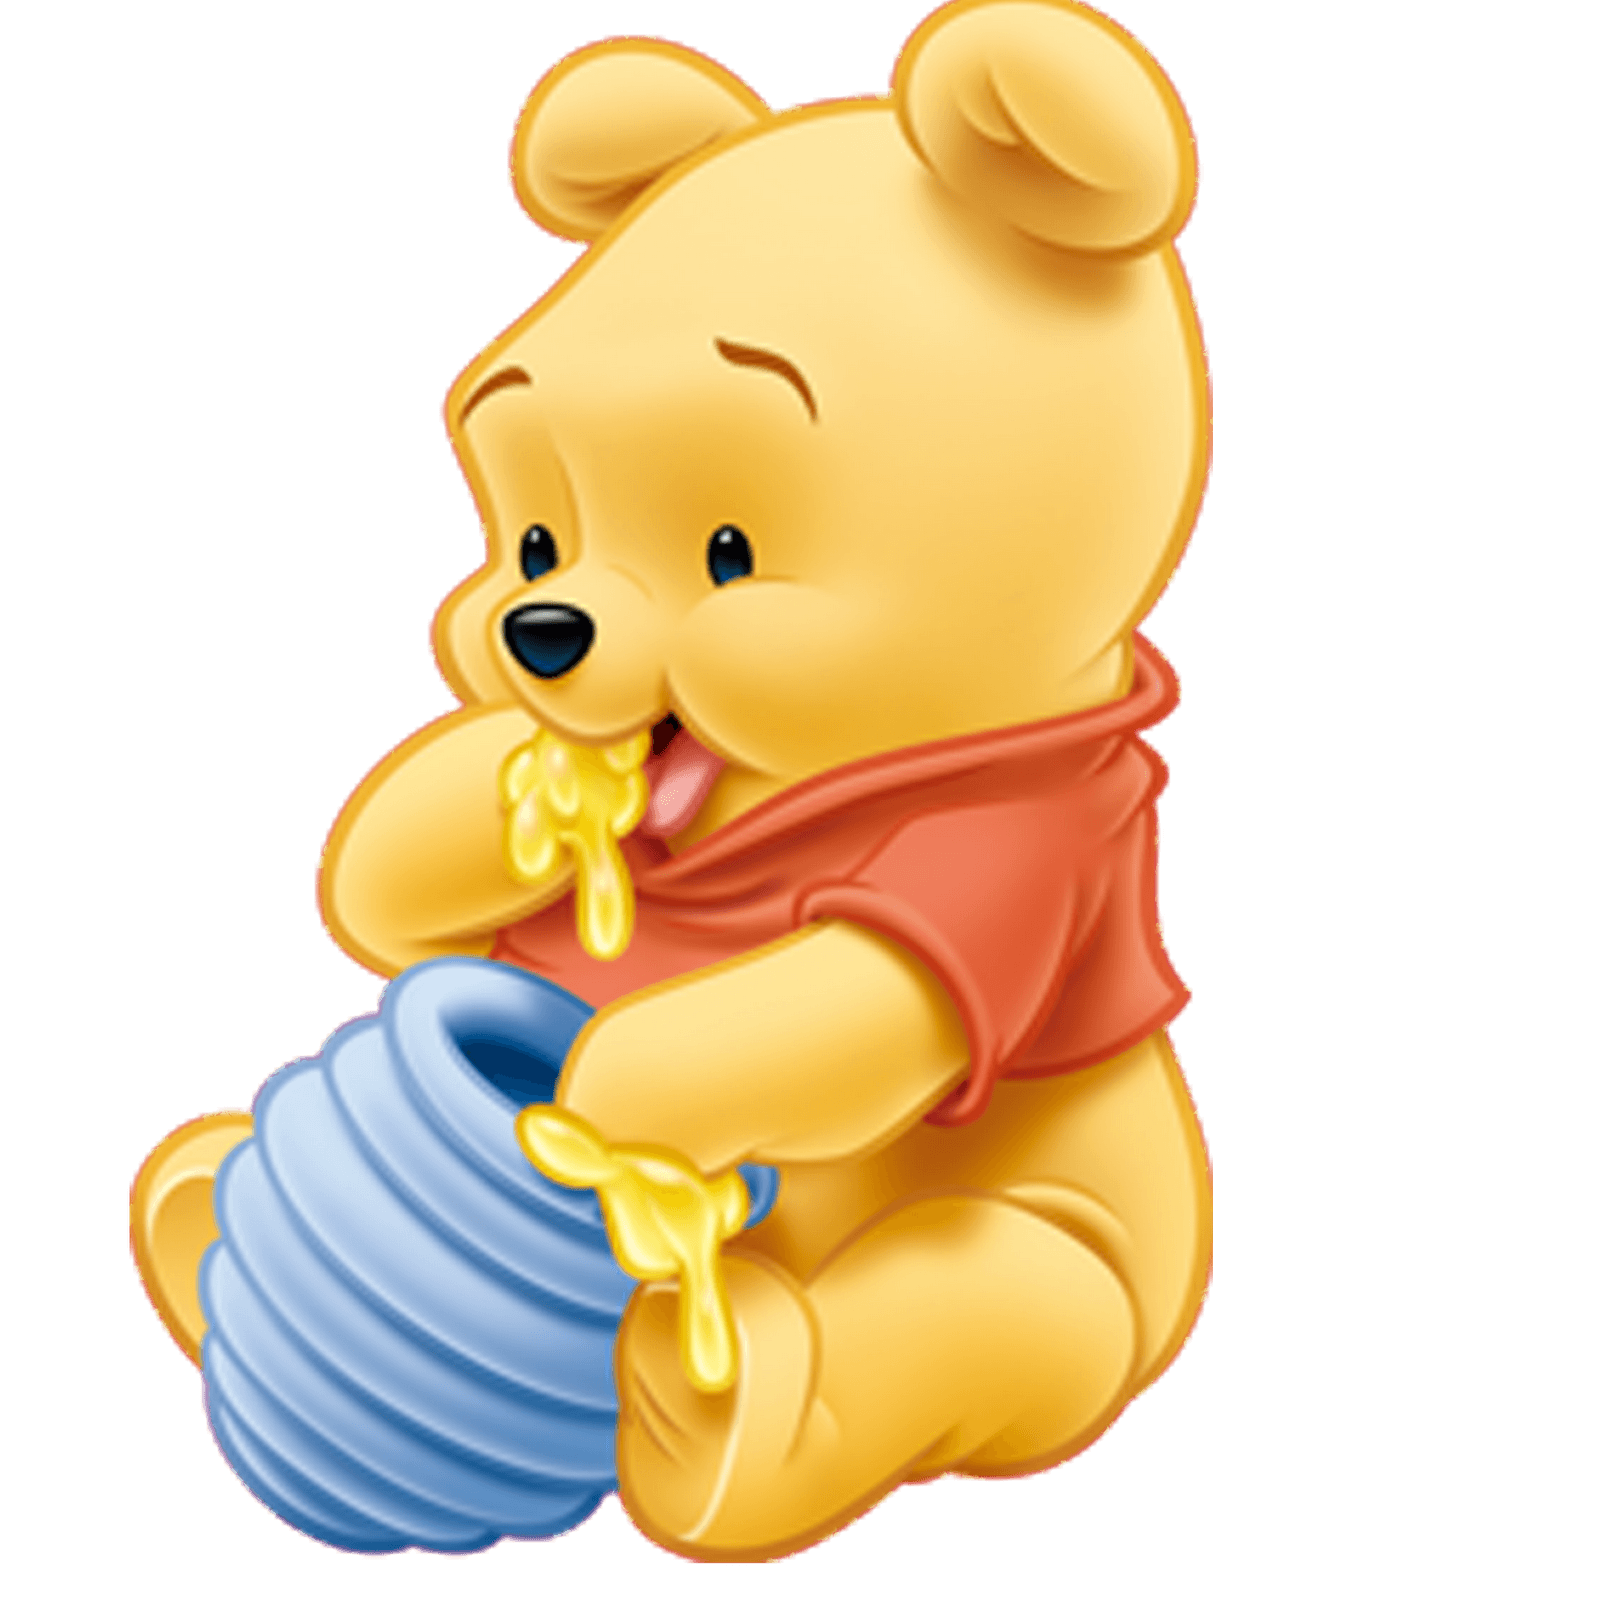 Winnie Pooh PNG image free download